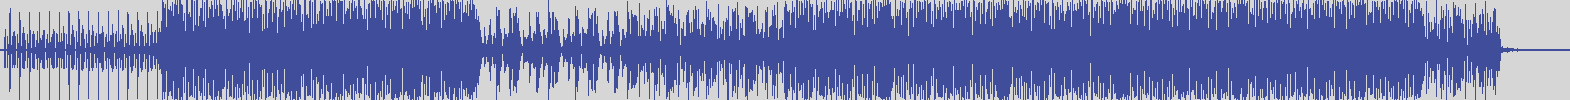 nf_boyz_records [NFY078] Anthony Kaiman - Shasta Cascade [Fluttuant Mix] audio wave form